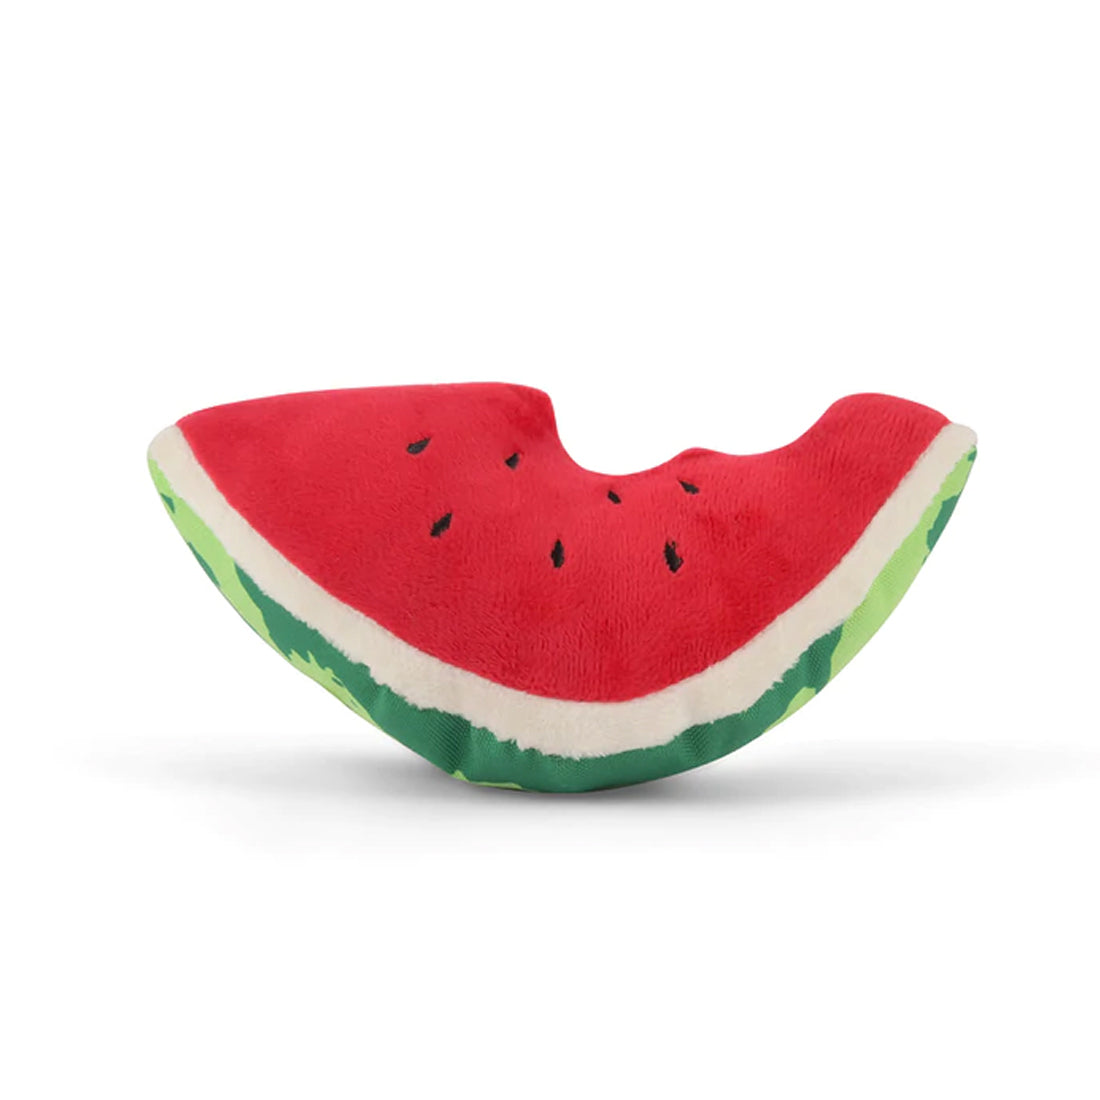 Tropical Paradise Toys Watermelon Image